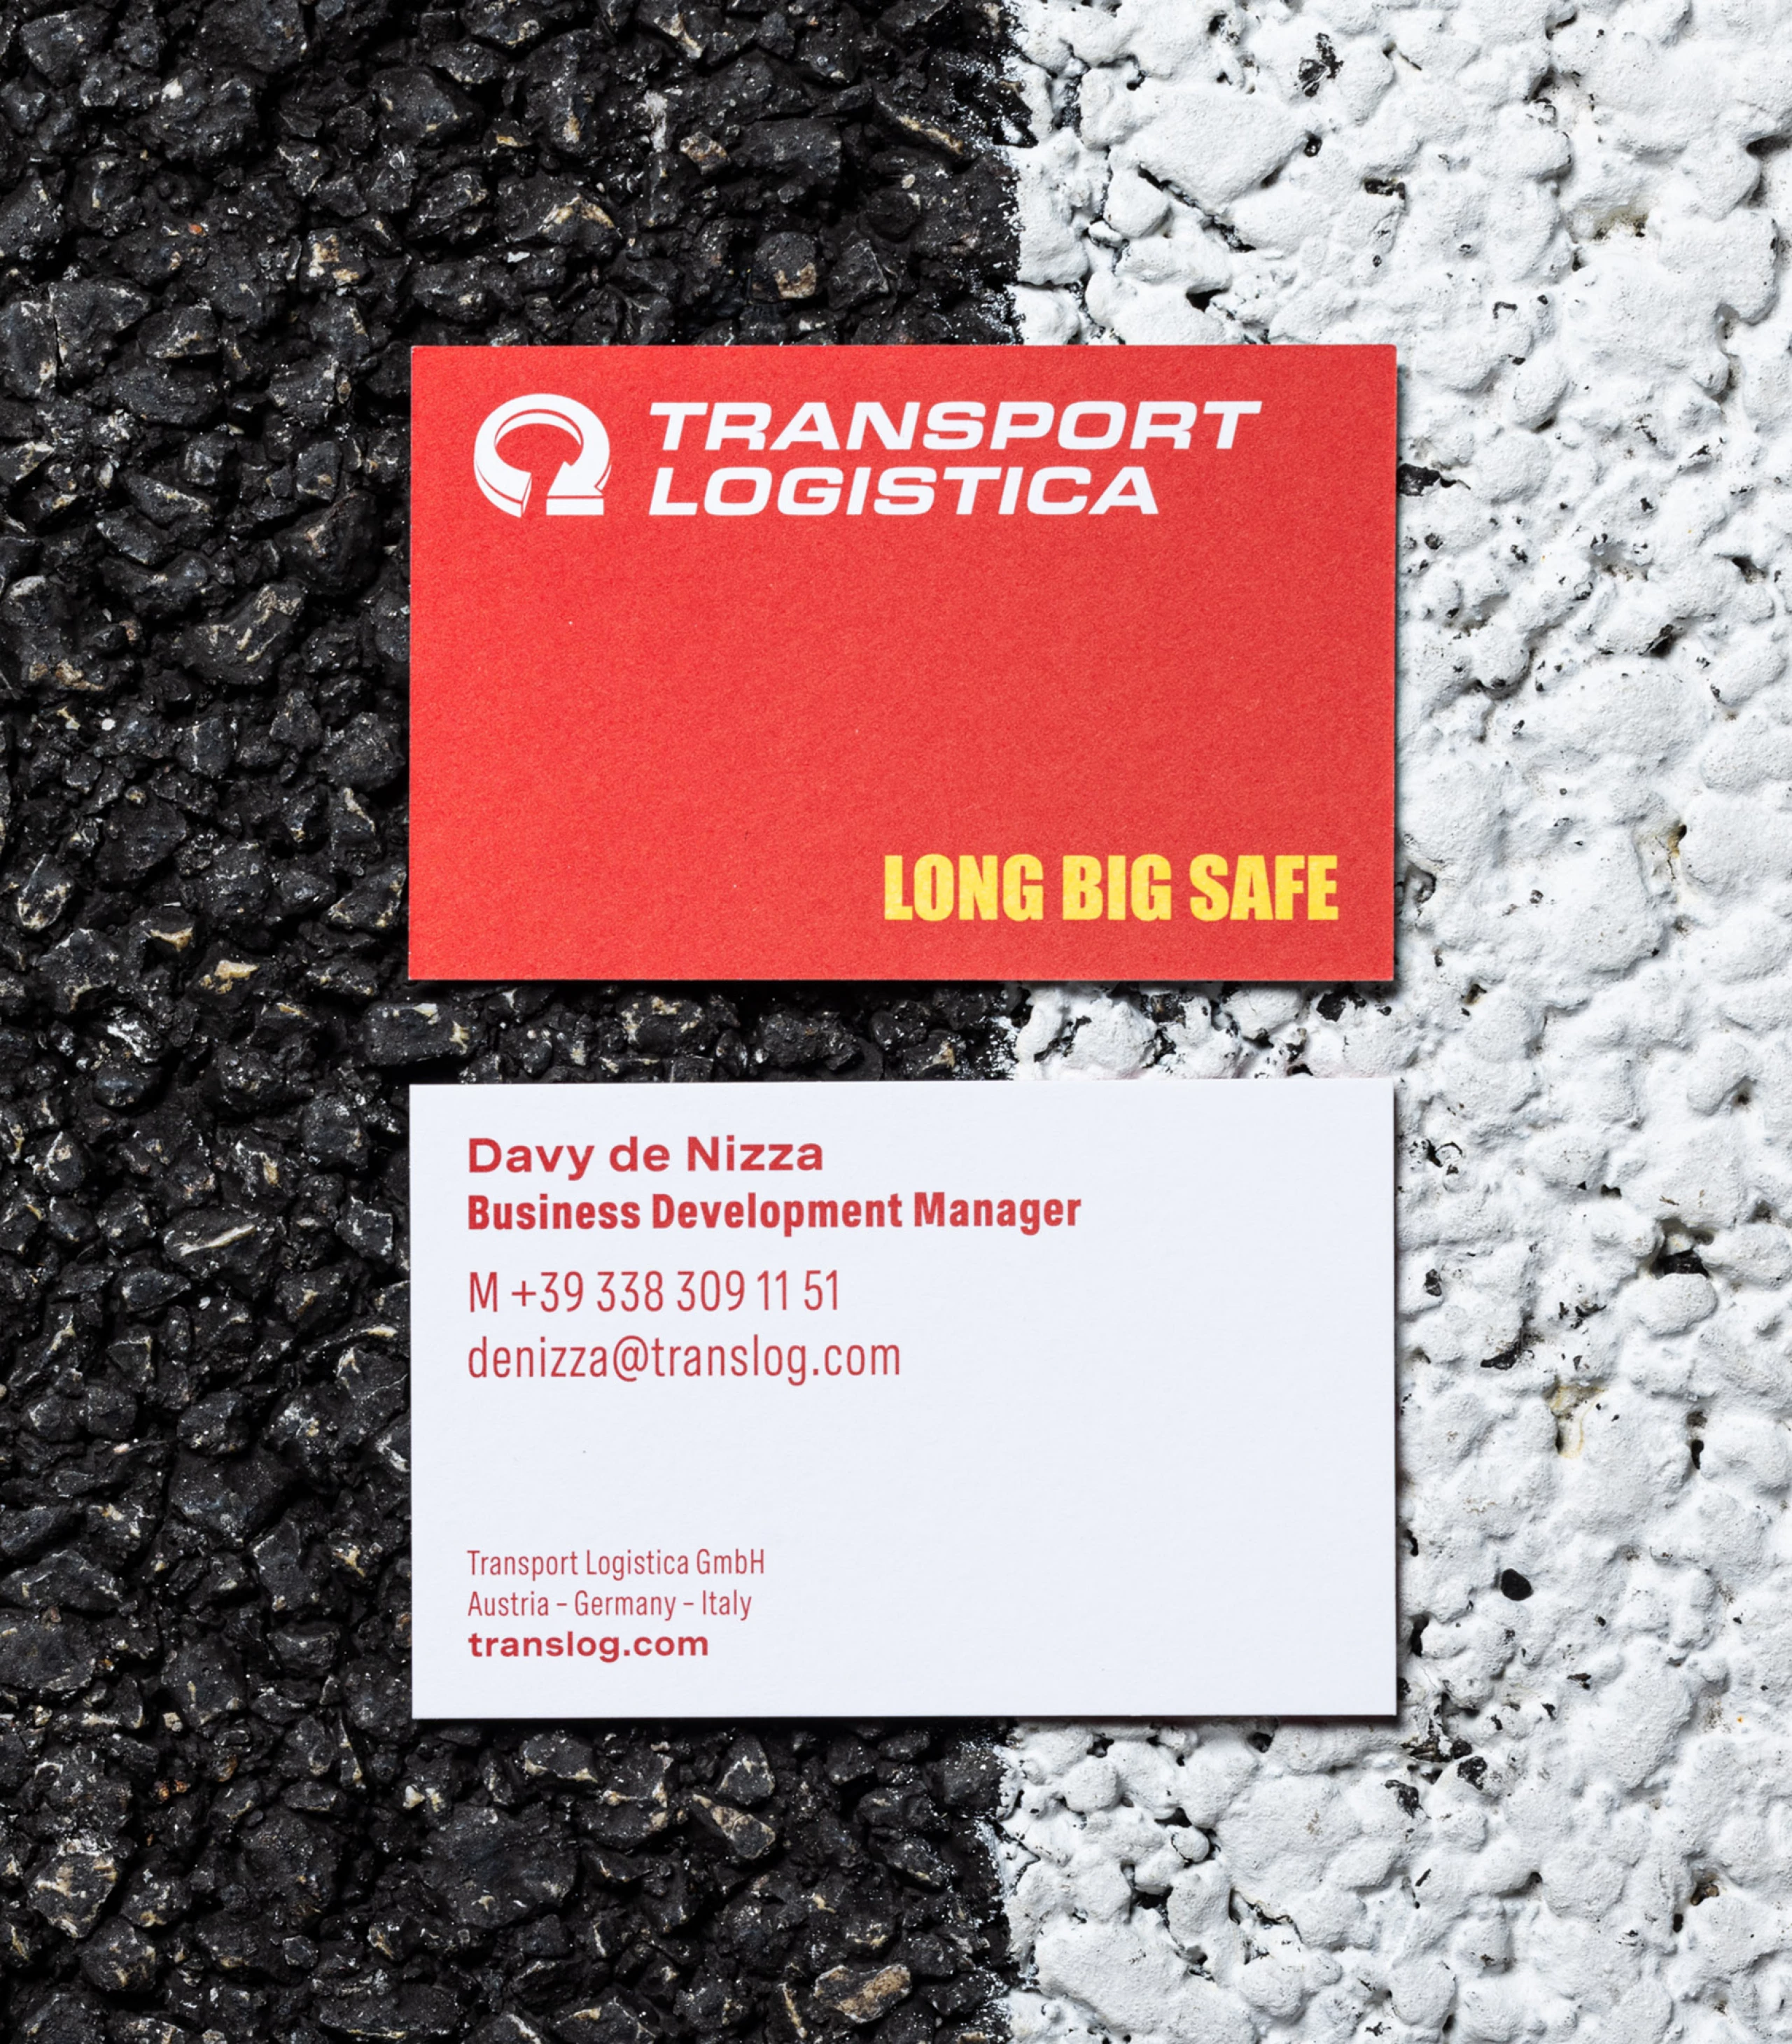 05-transport_logistica-rebranding-business_cards-w13.jpg